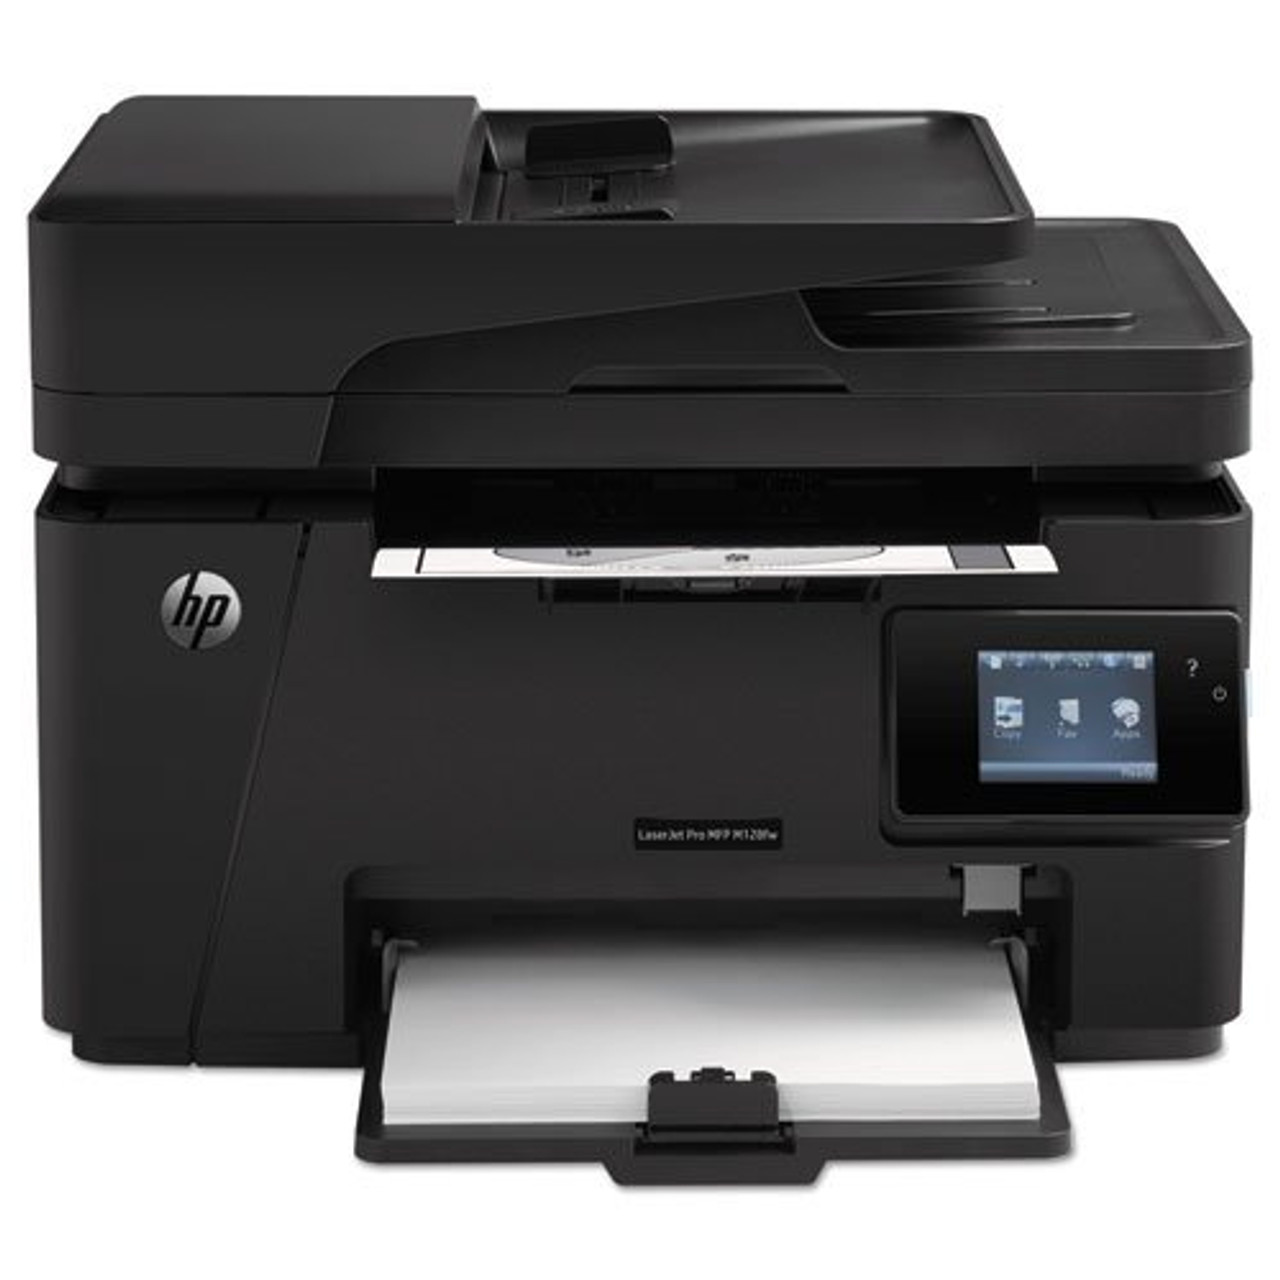 HP LaserJet Pro M127FW - CZ183A - HP Laser Printer MFP for sale